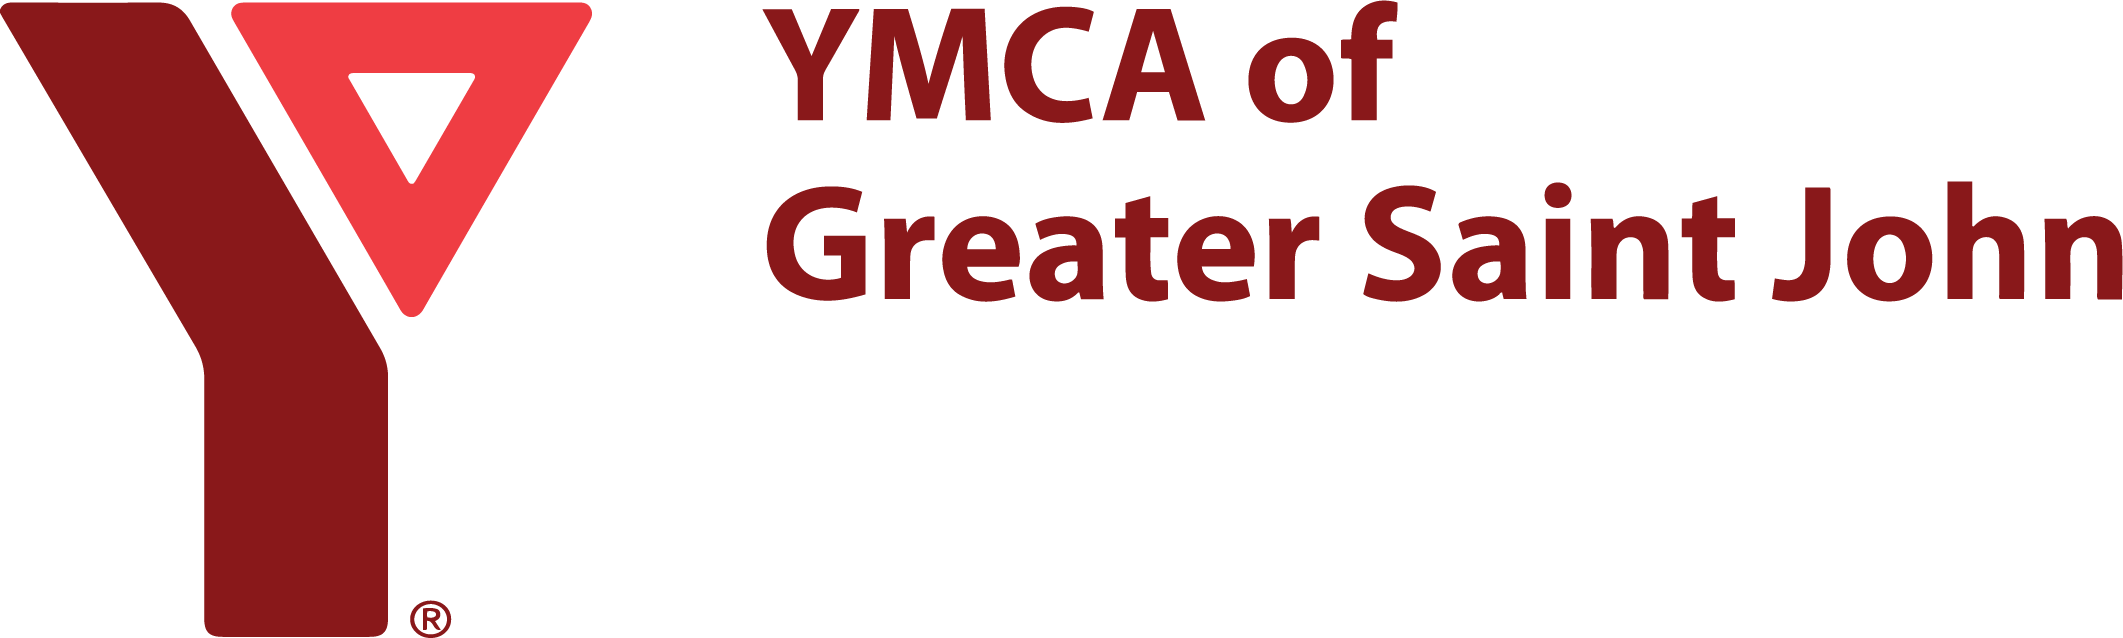 YMCA of Greater Saint Joh logo